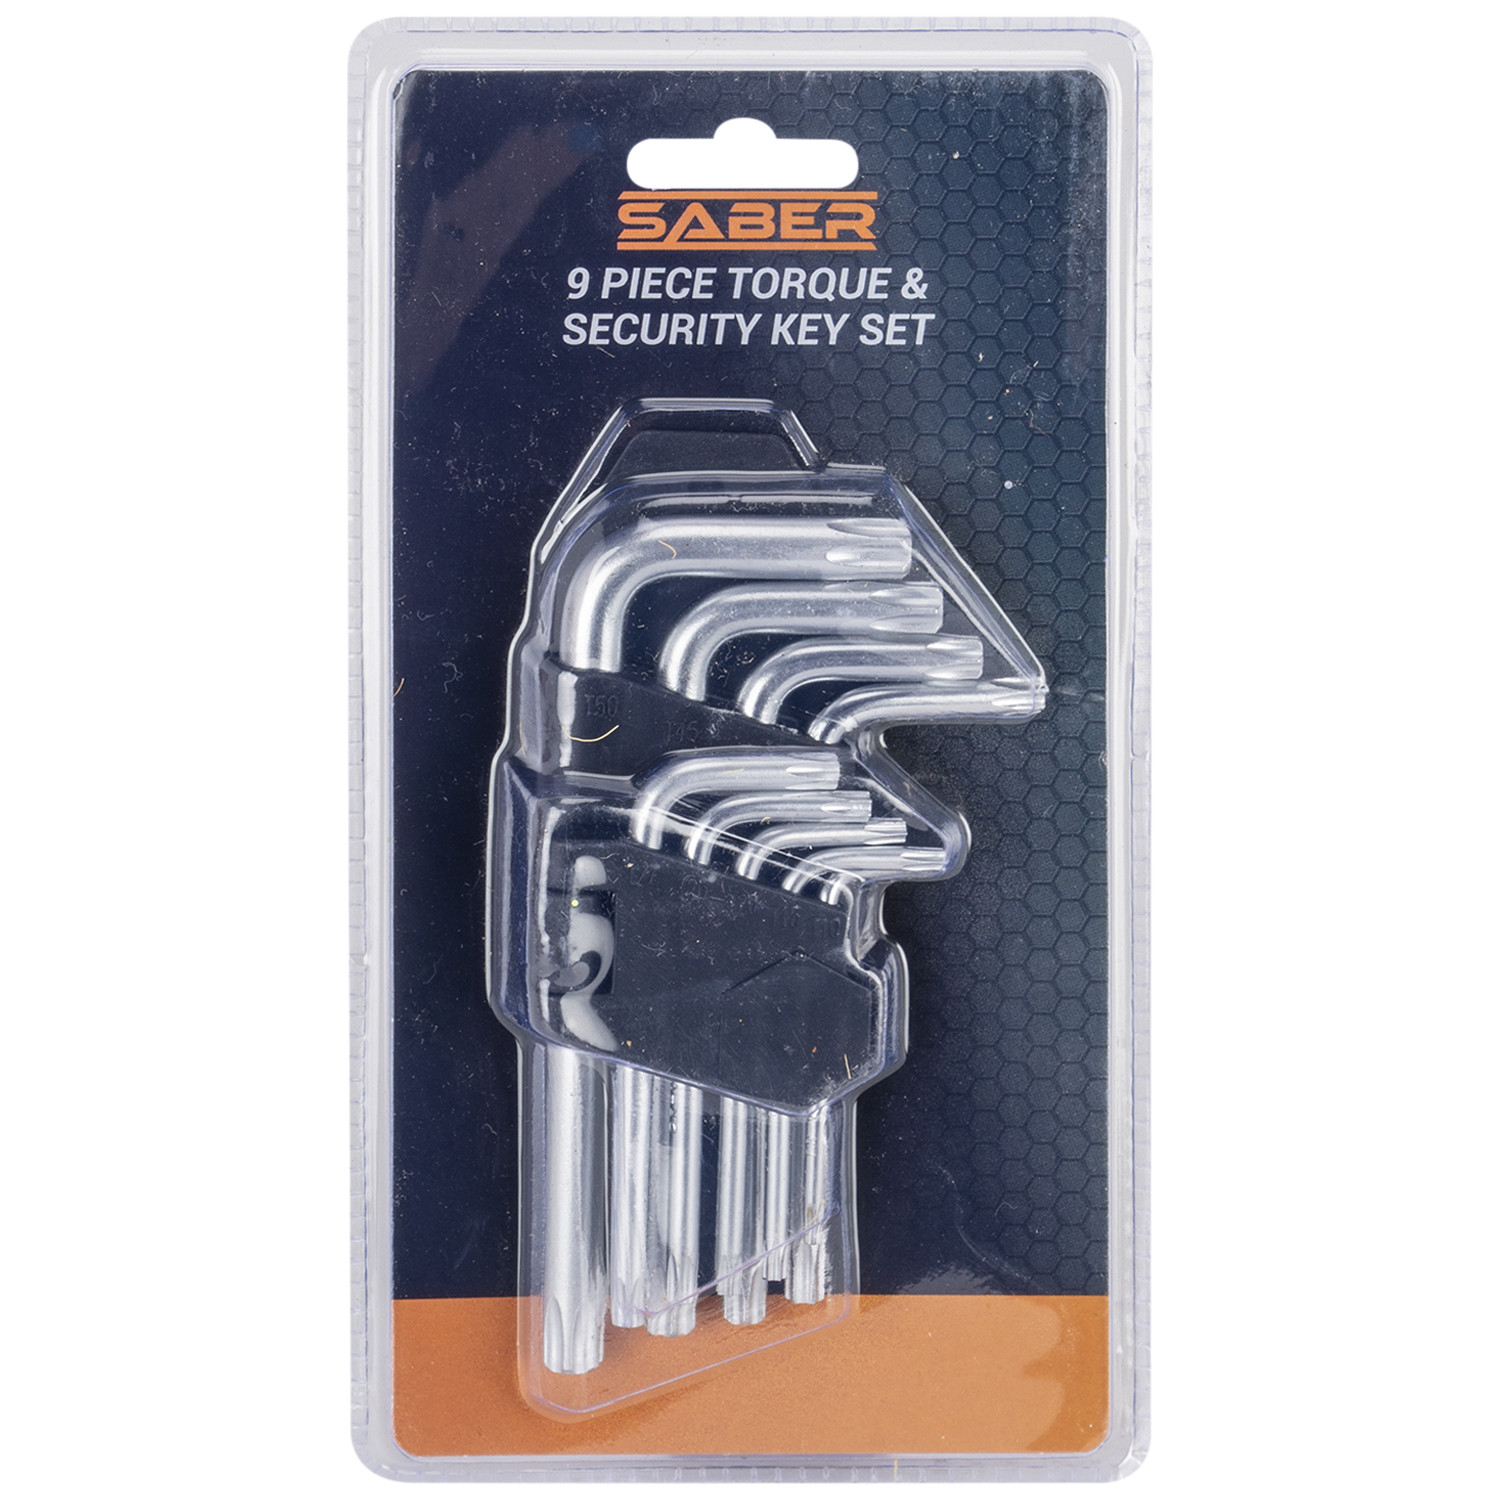 Saber 9 Piece Torque and Security Key Set Image